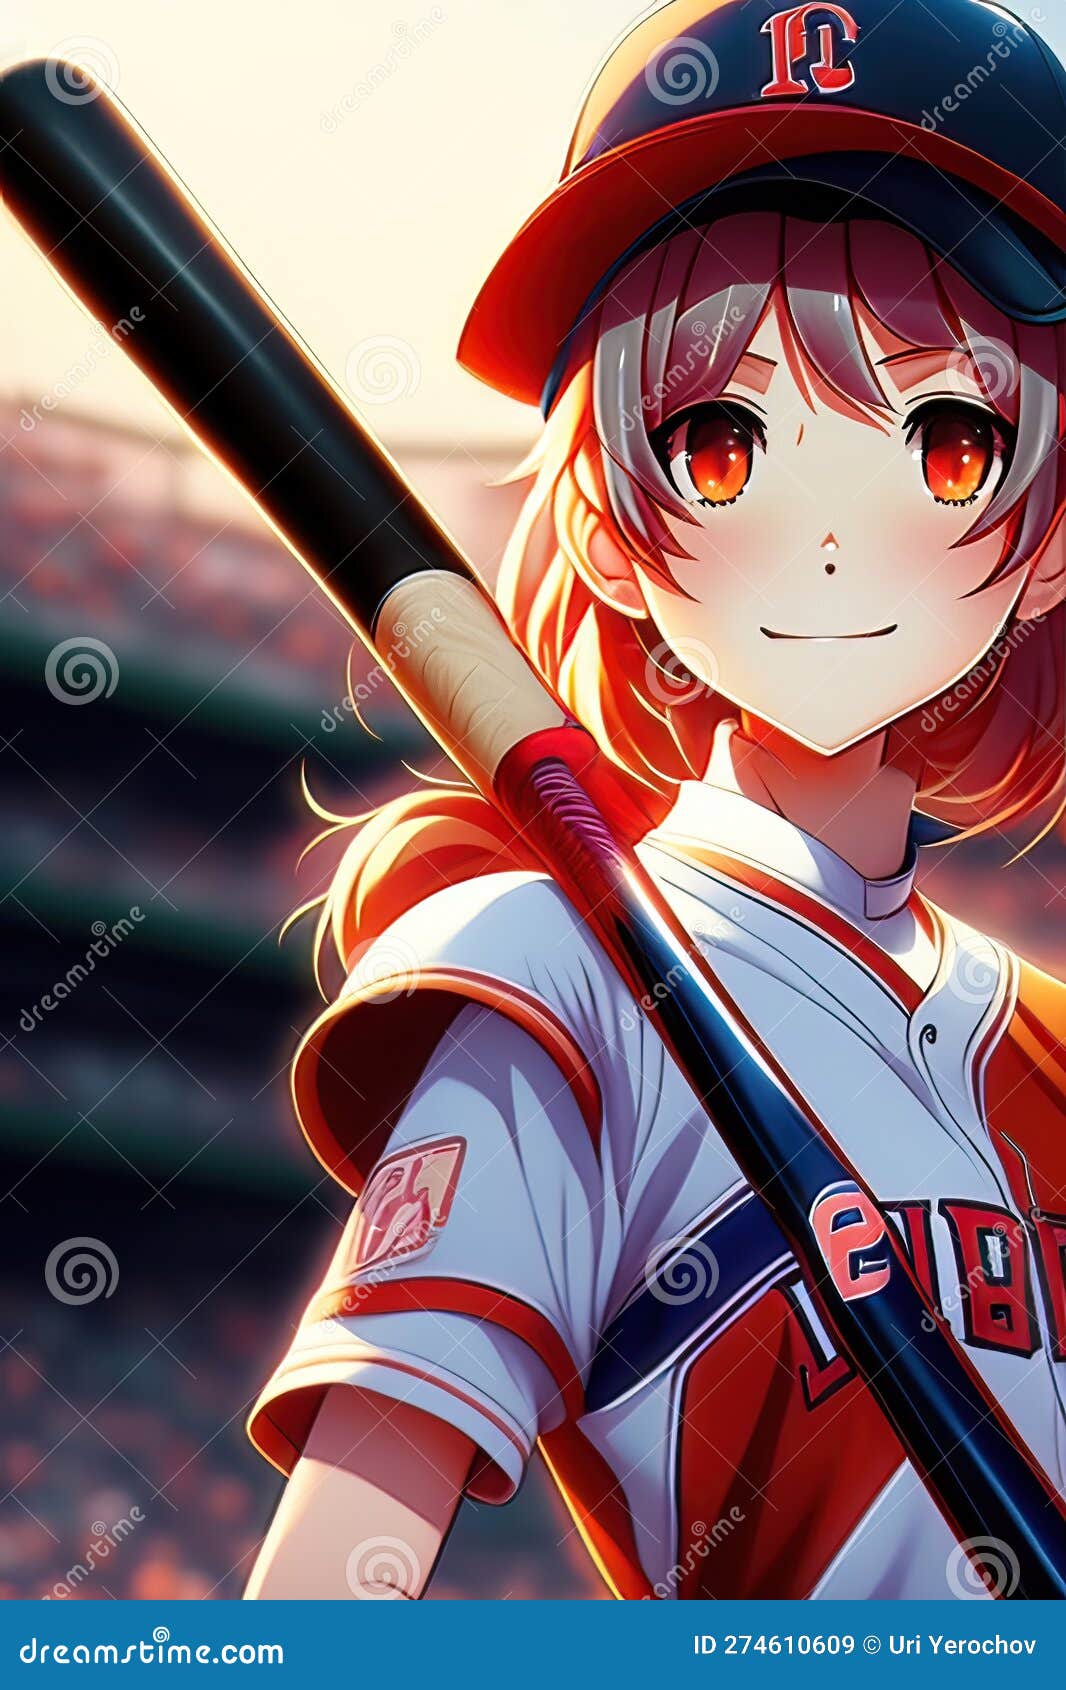 anime girl with bat